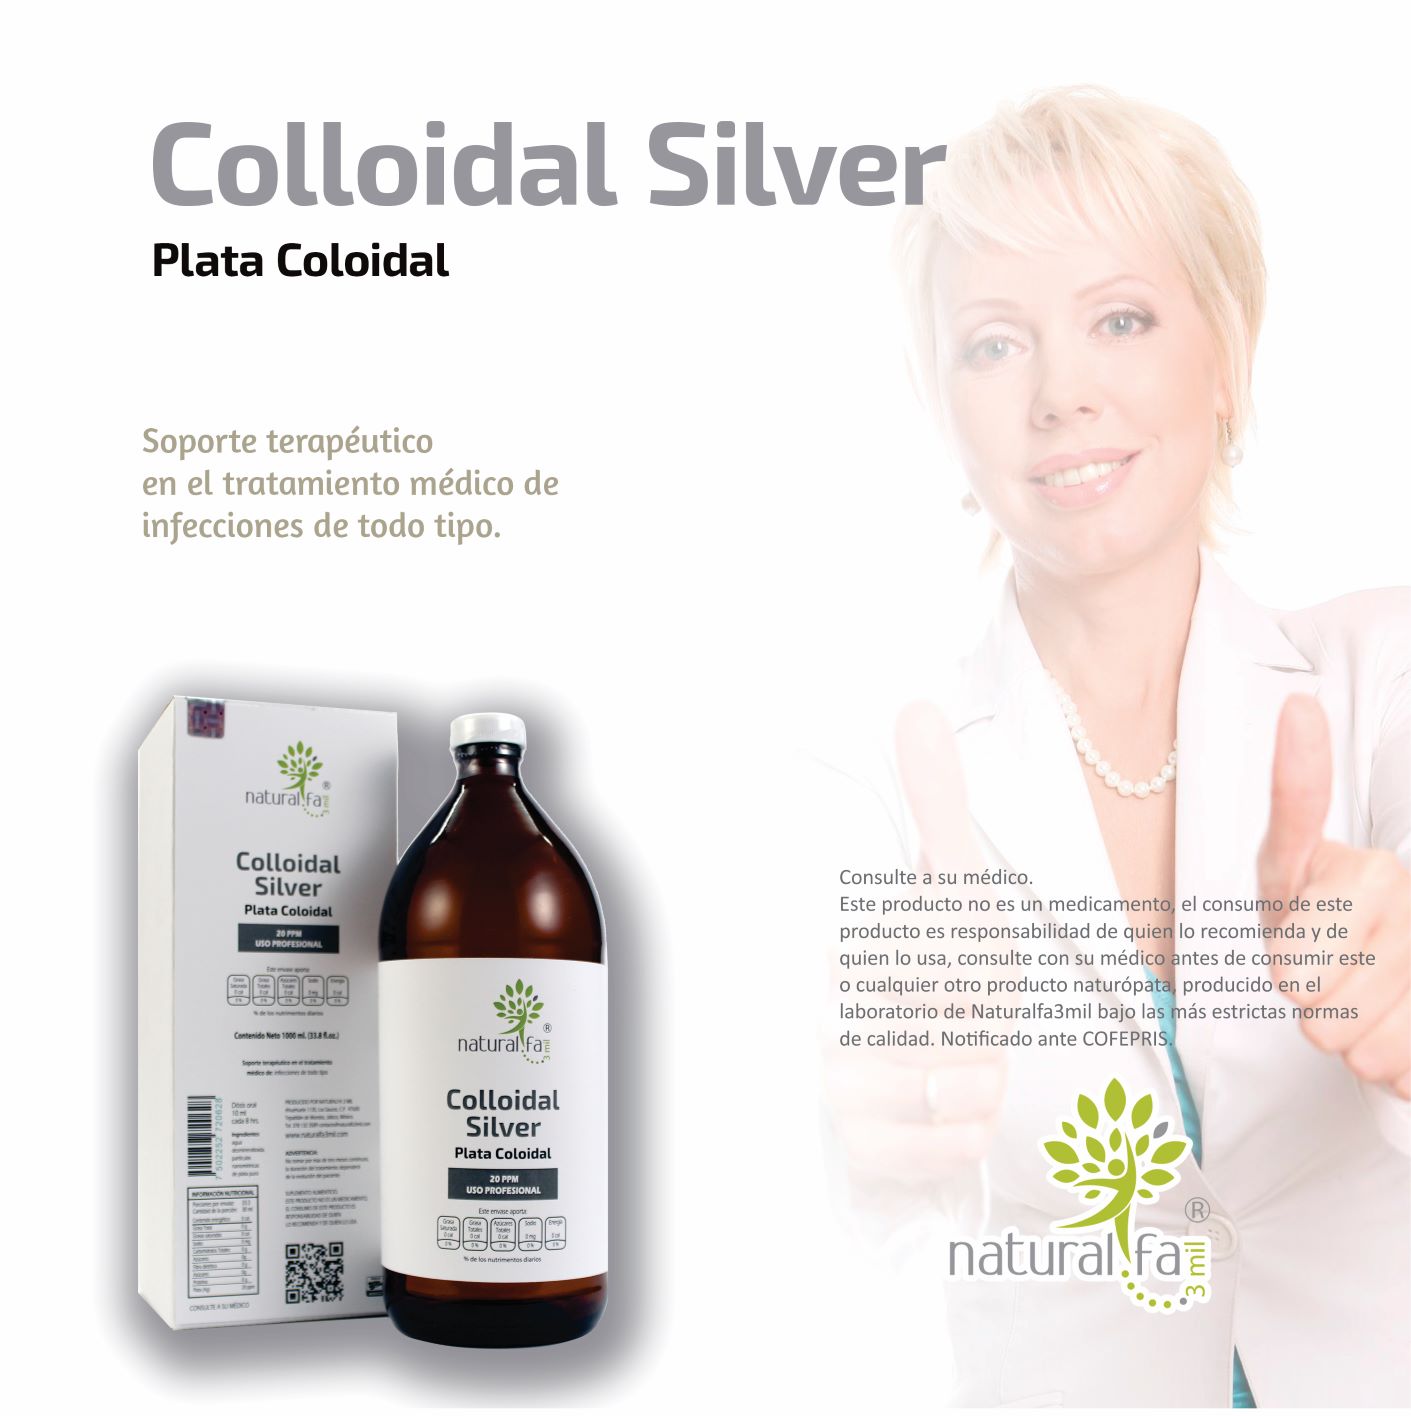 🔵¡PLATA COLOIDAL!🔵 Existe un sinfín de usos de la plata coloidal